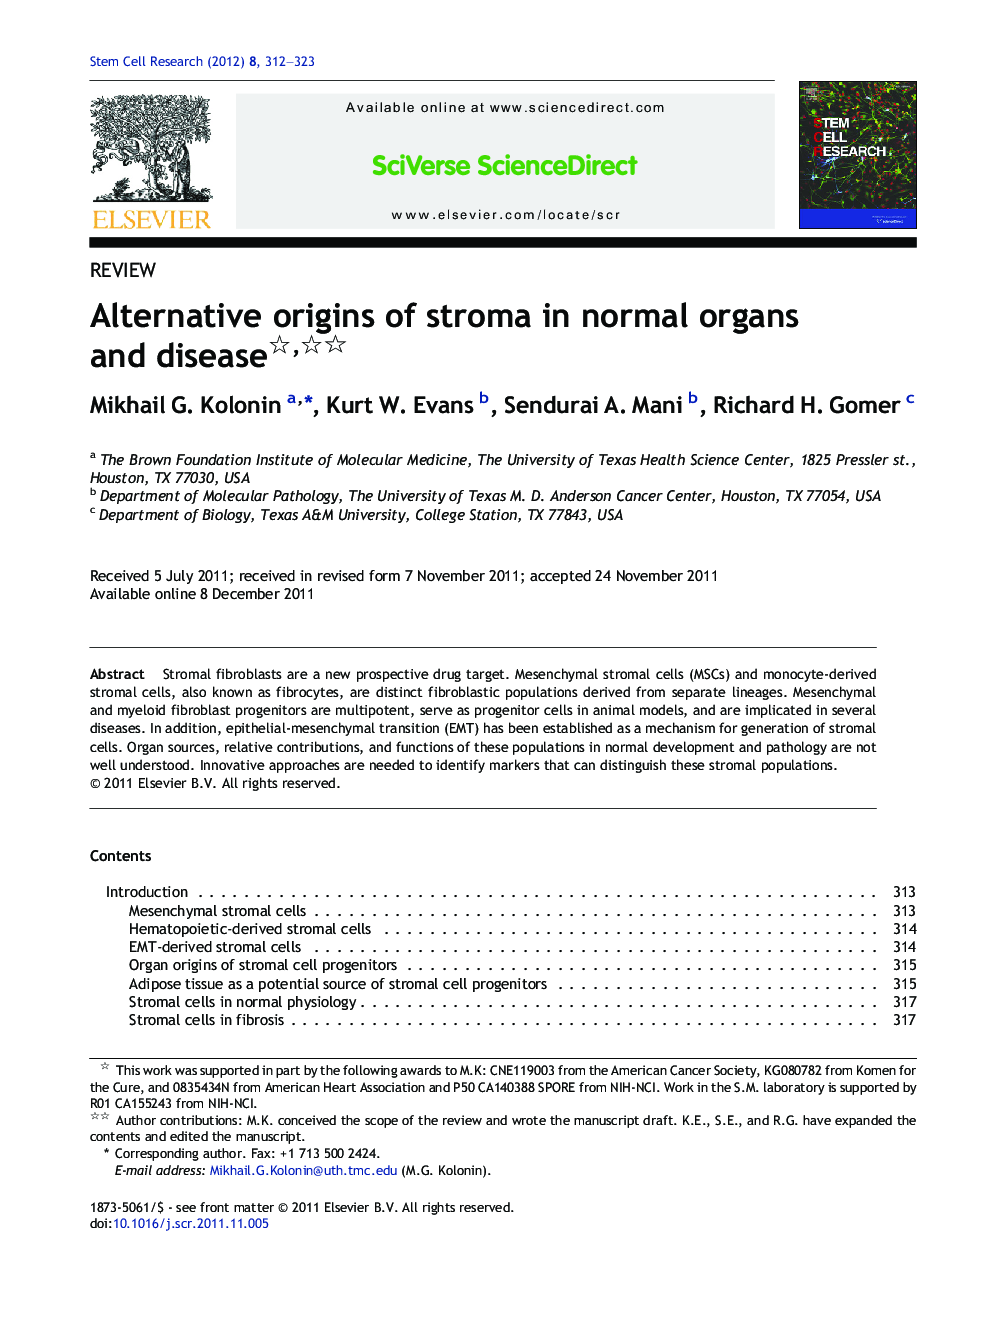 Alternative origins of stroma in normal organs and disease